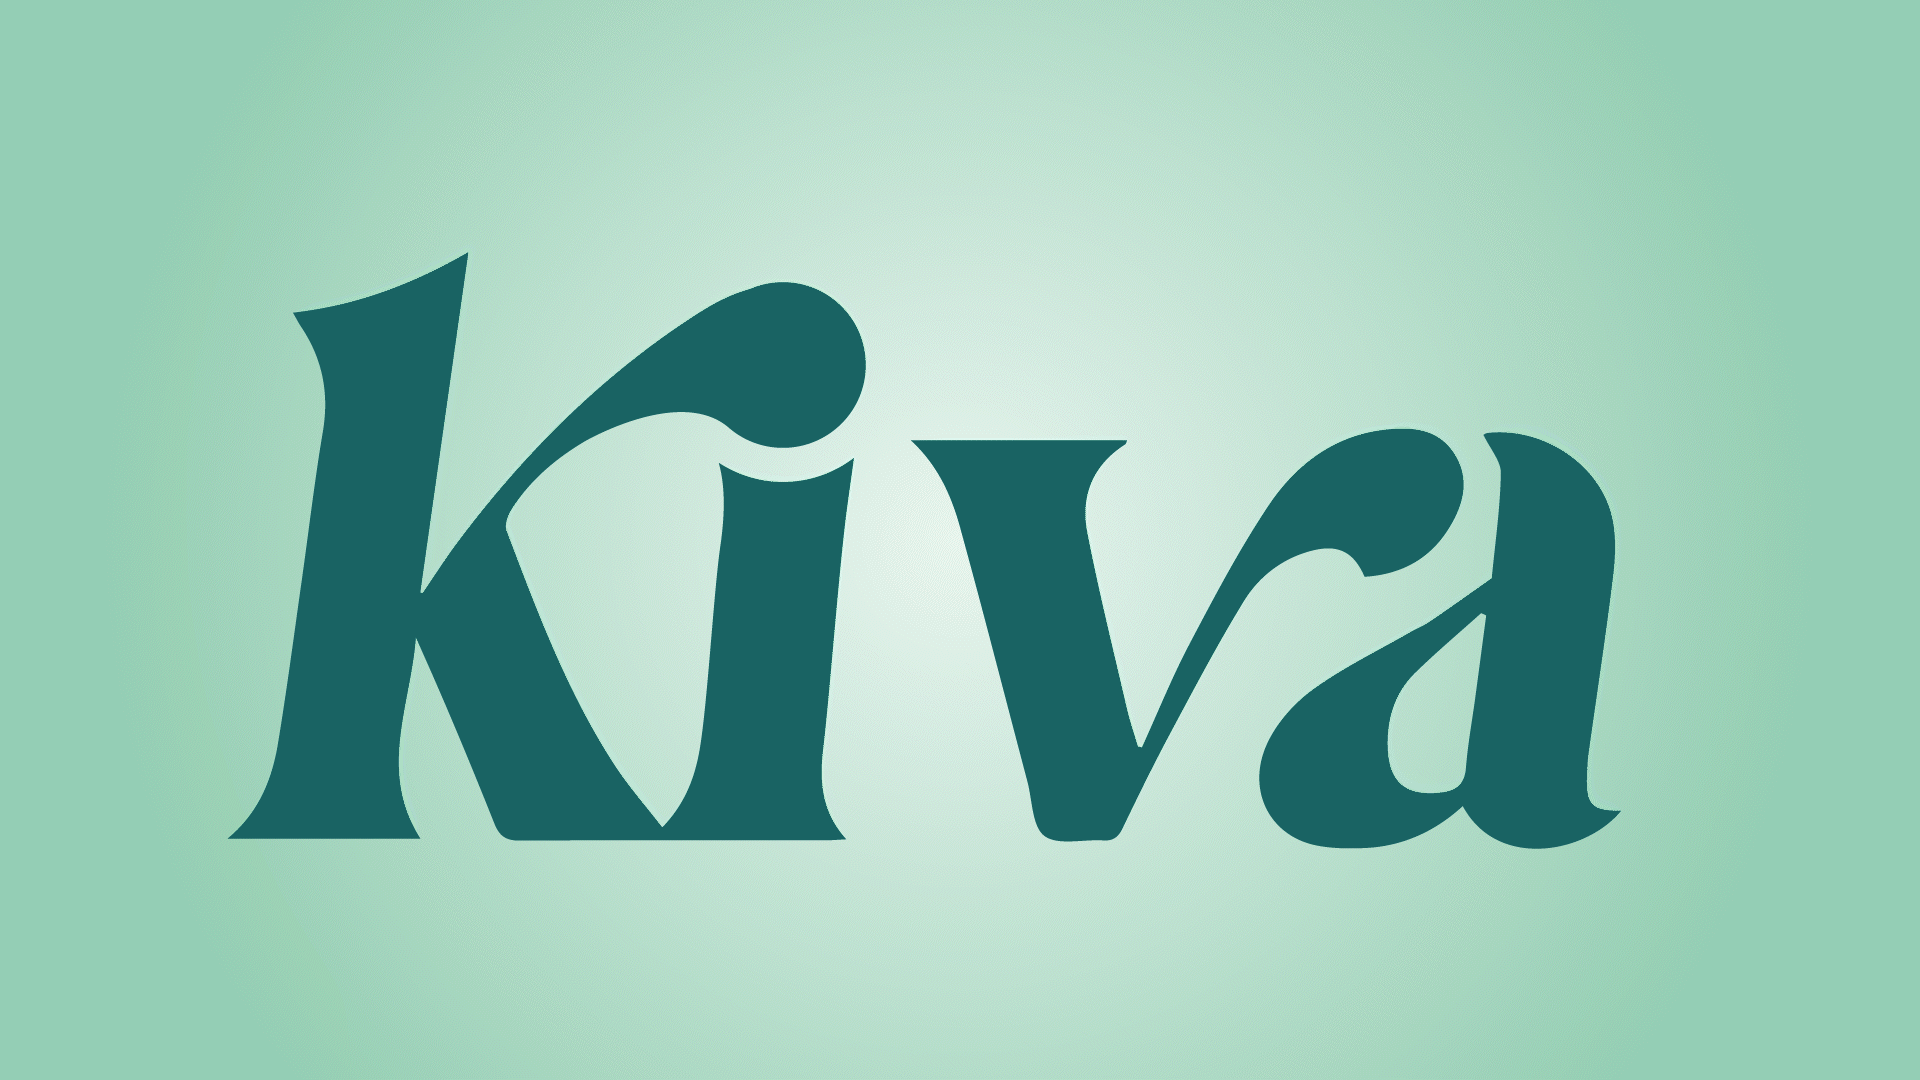 Kiva drinks